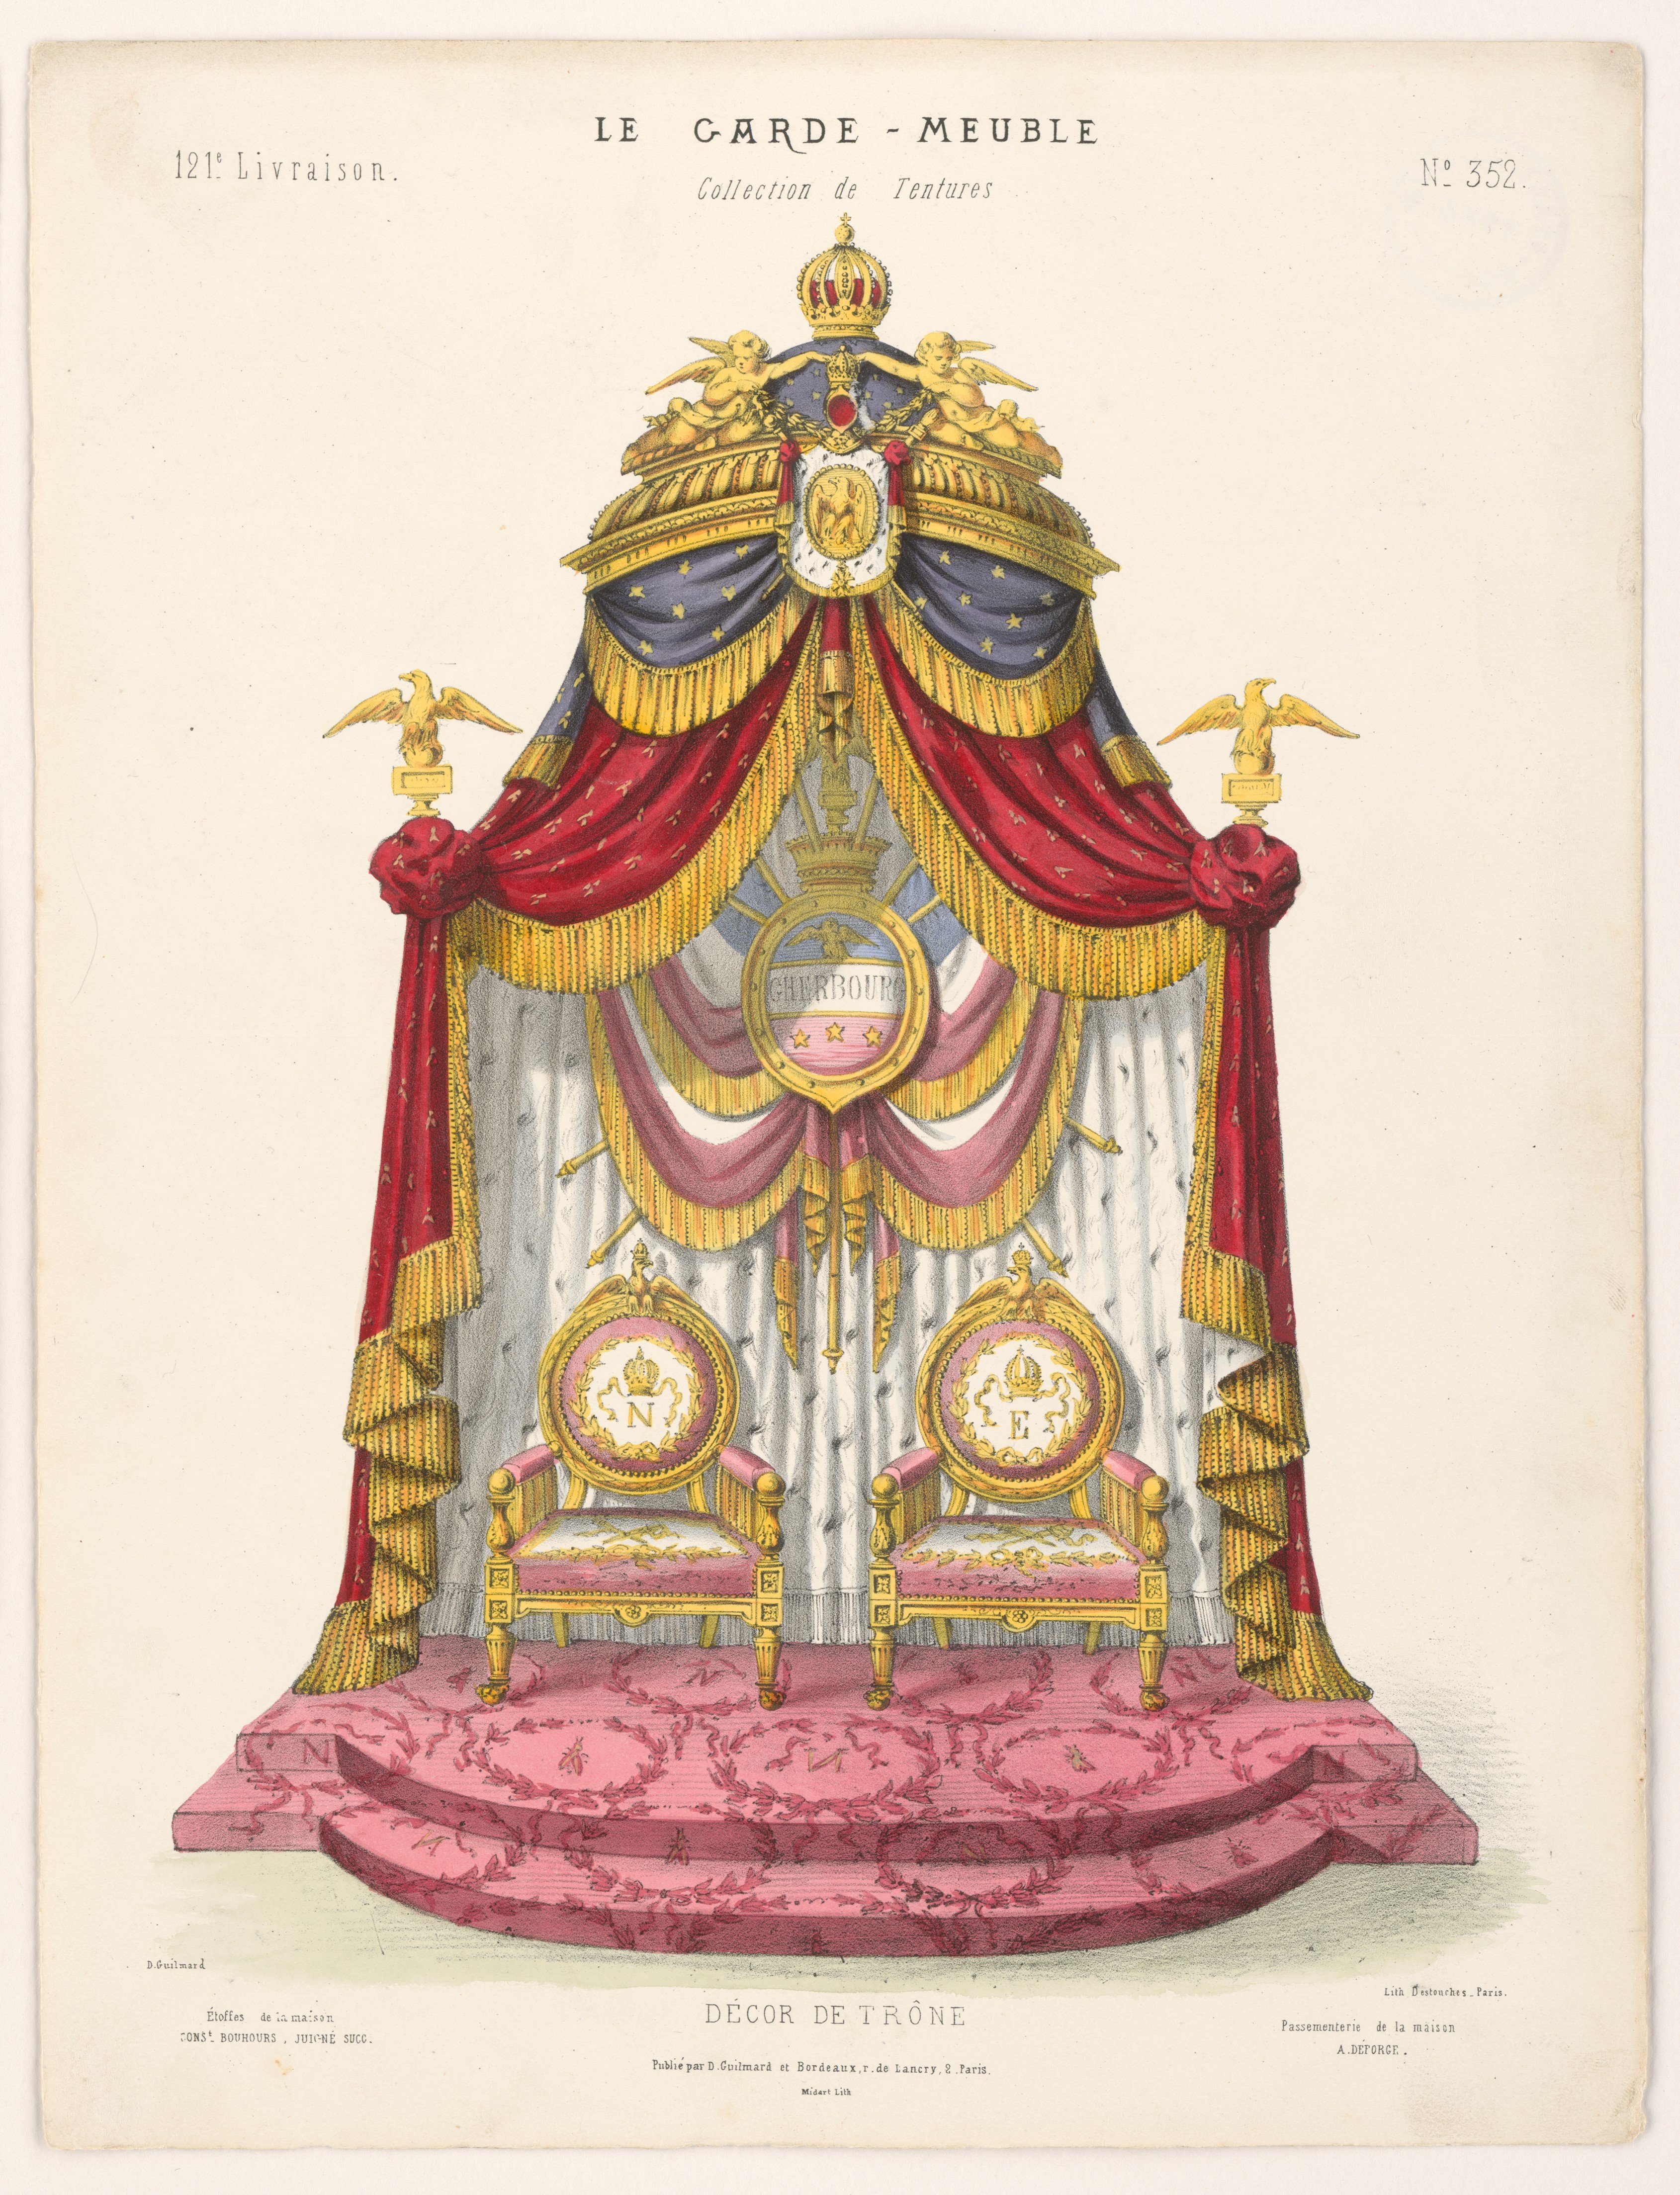 "Decor de Trône", aus: Le Garde-meuble (Stiftung Fürst-Pückler-Museum Park und Schloss Branitz Public Domain Mark)